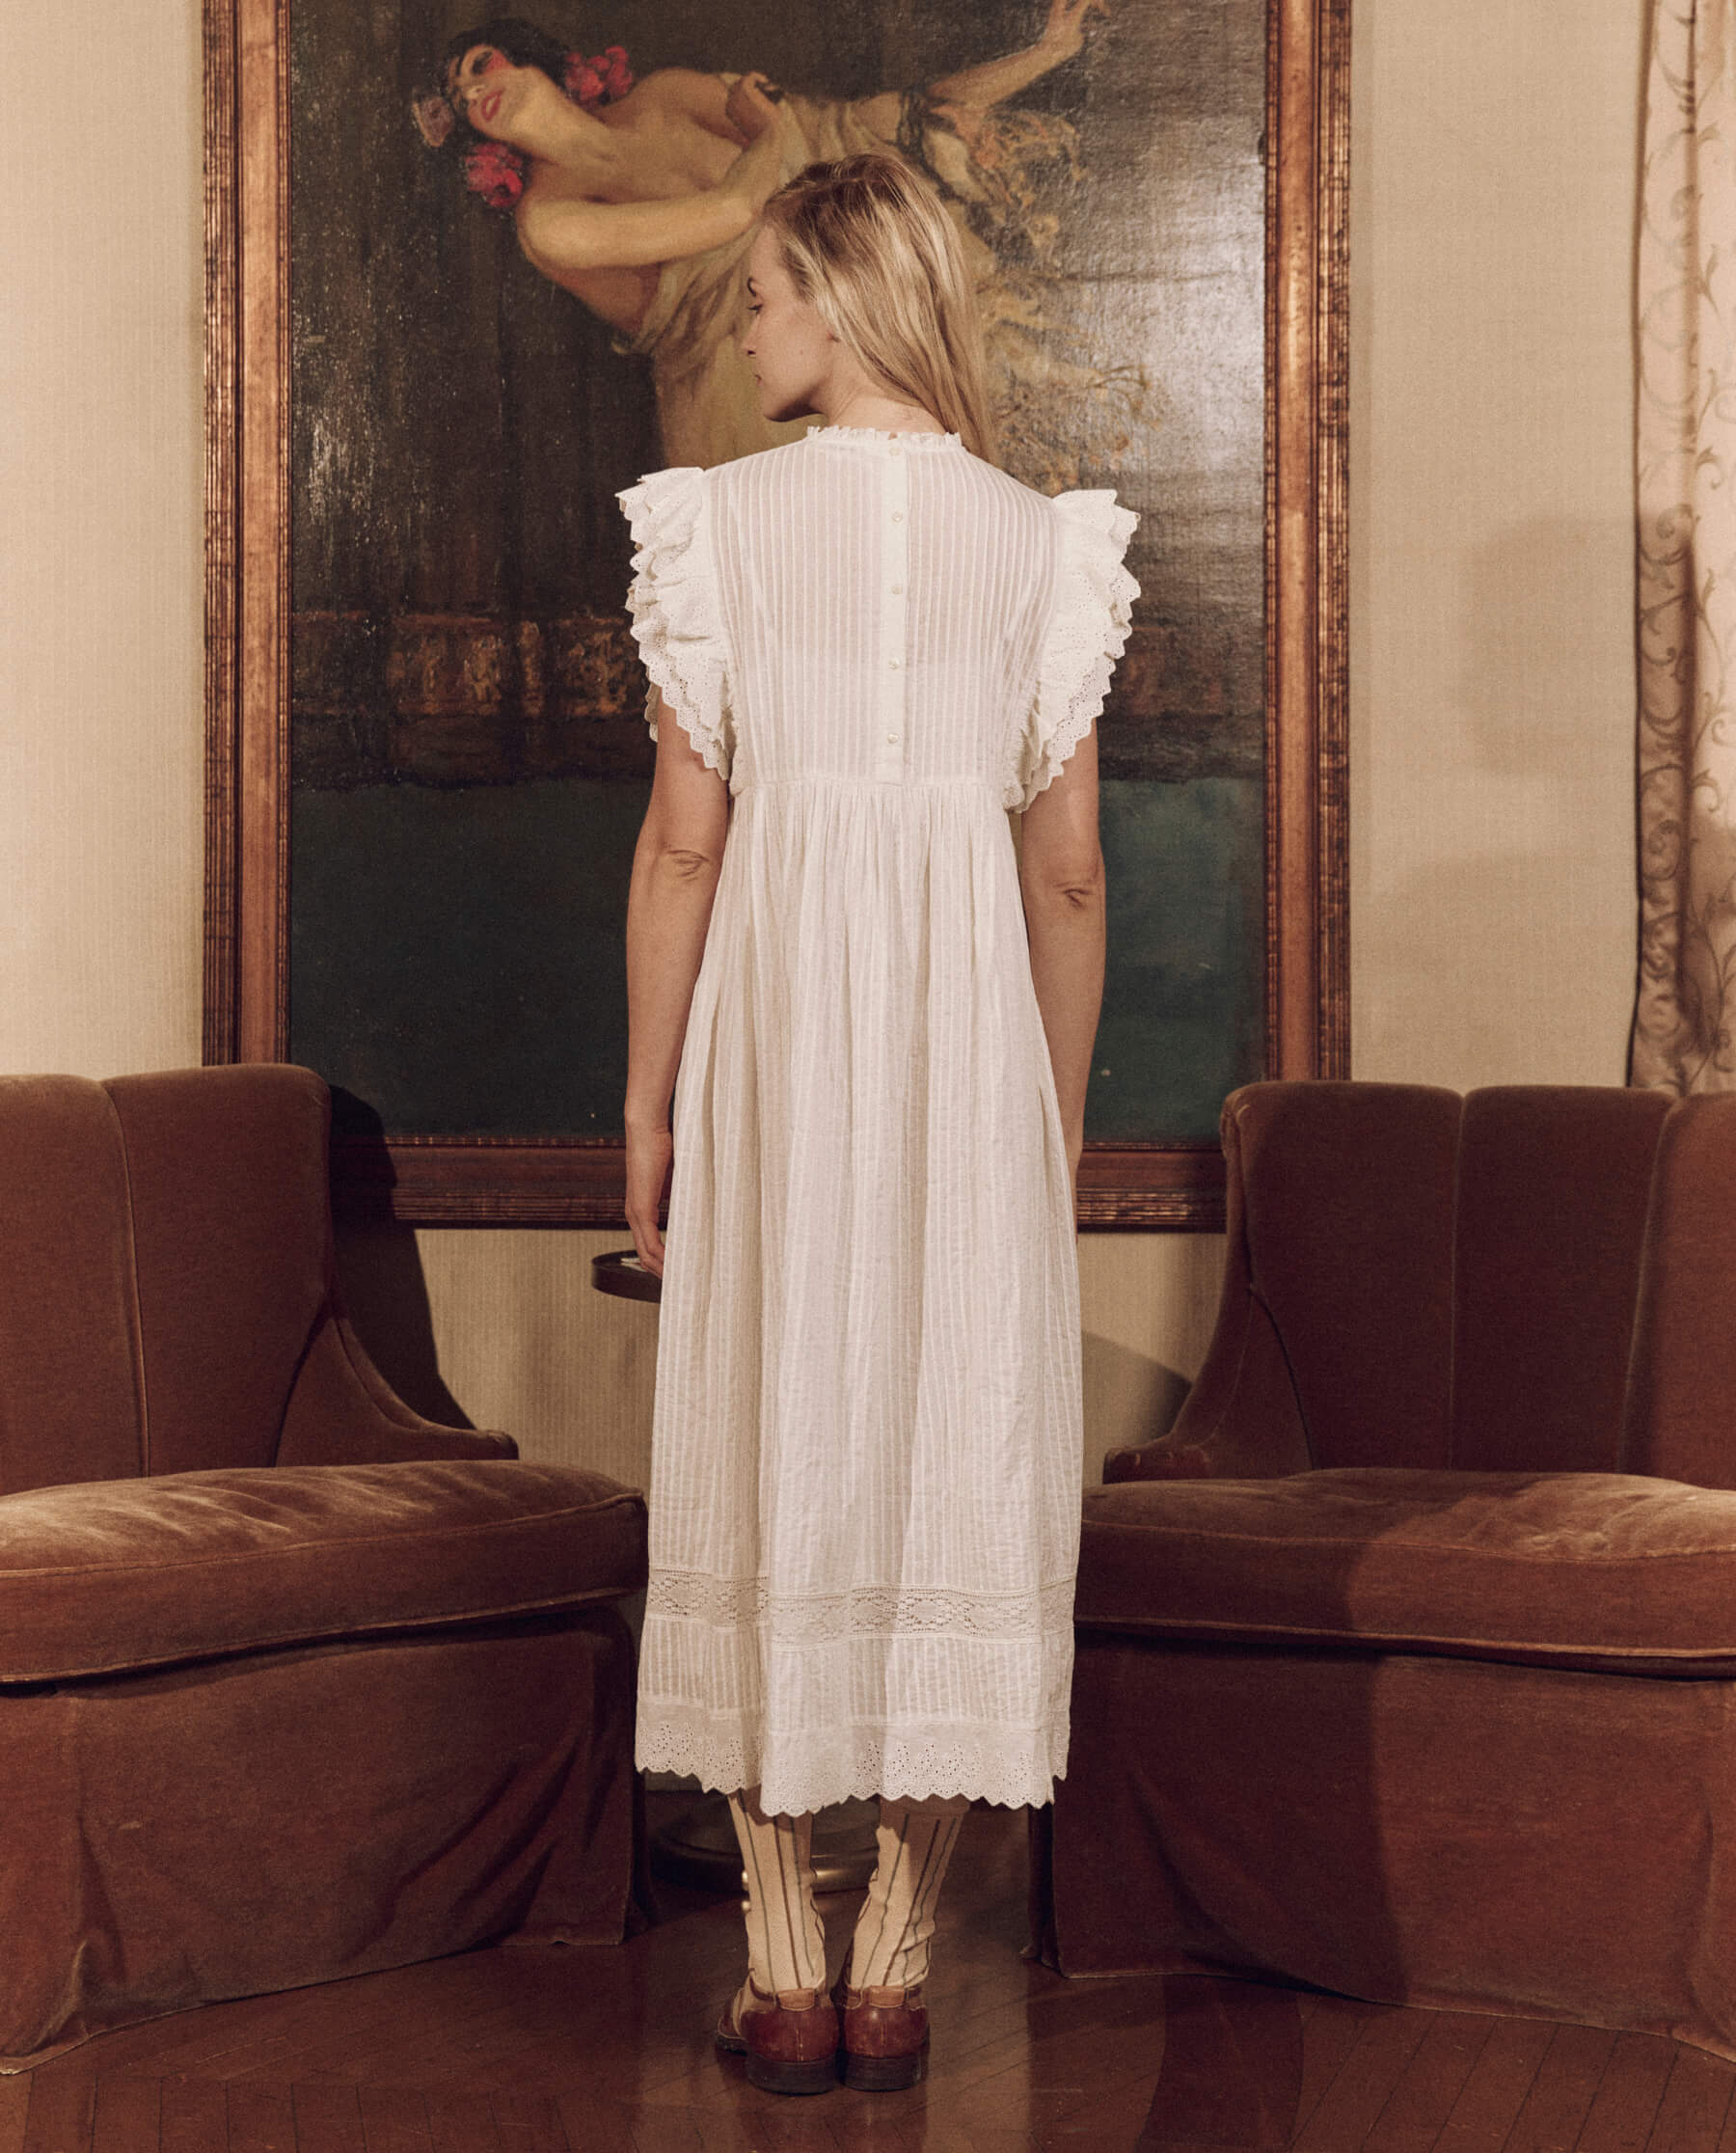 The Trellis Dress. -- White DRESSES THE GREAT. SP24 BIRKENSTOCK